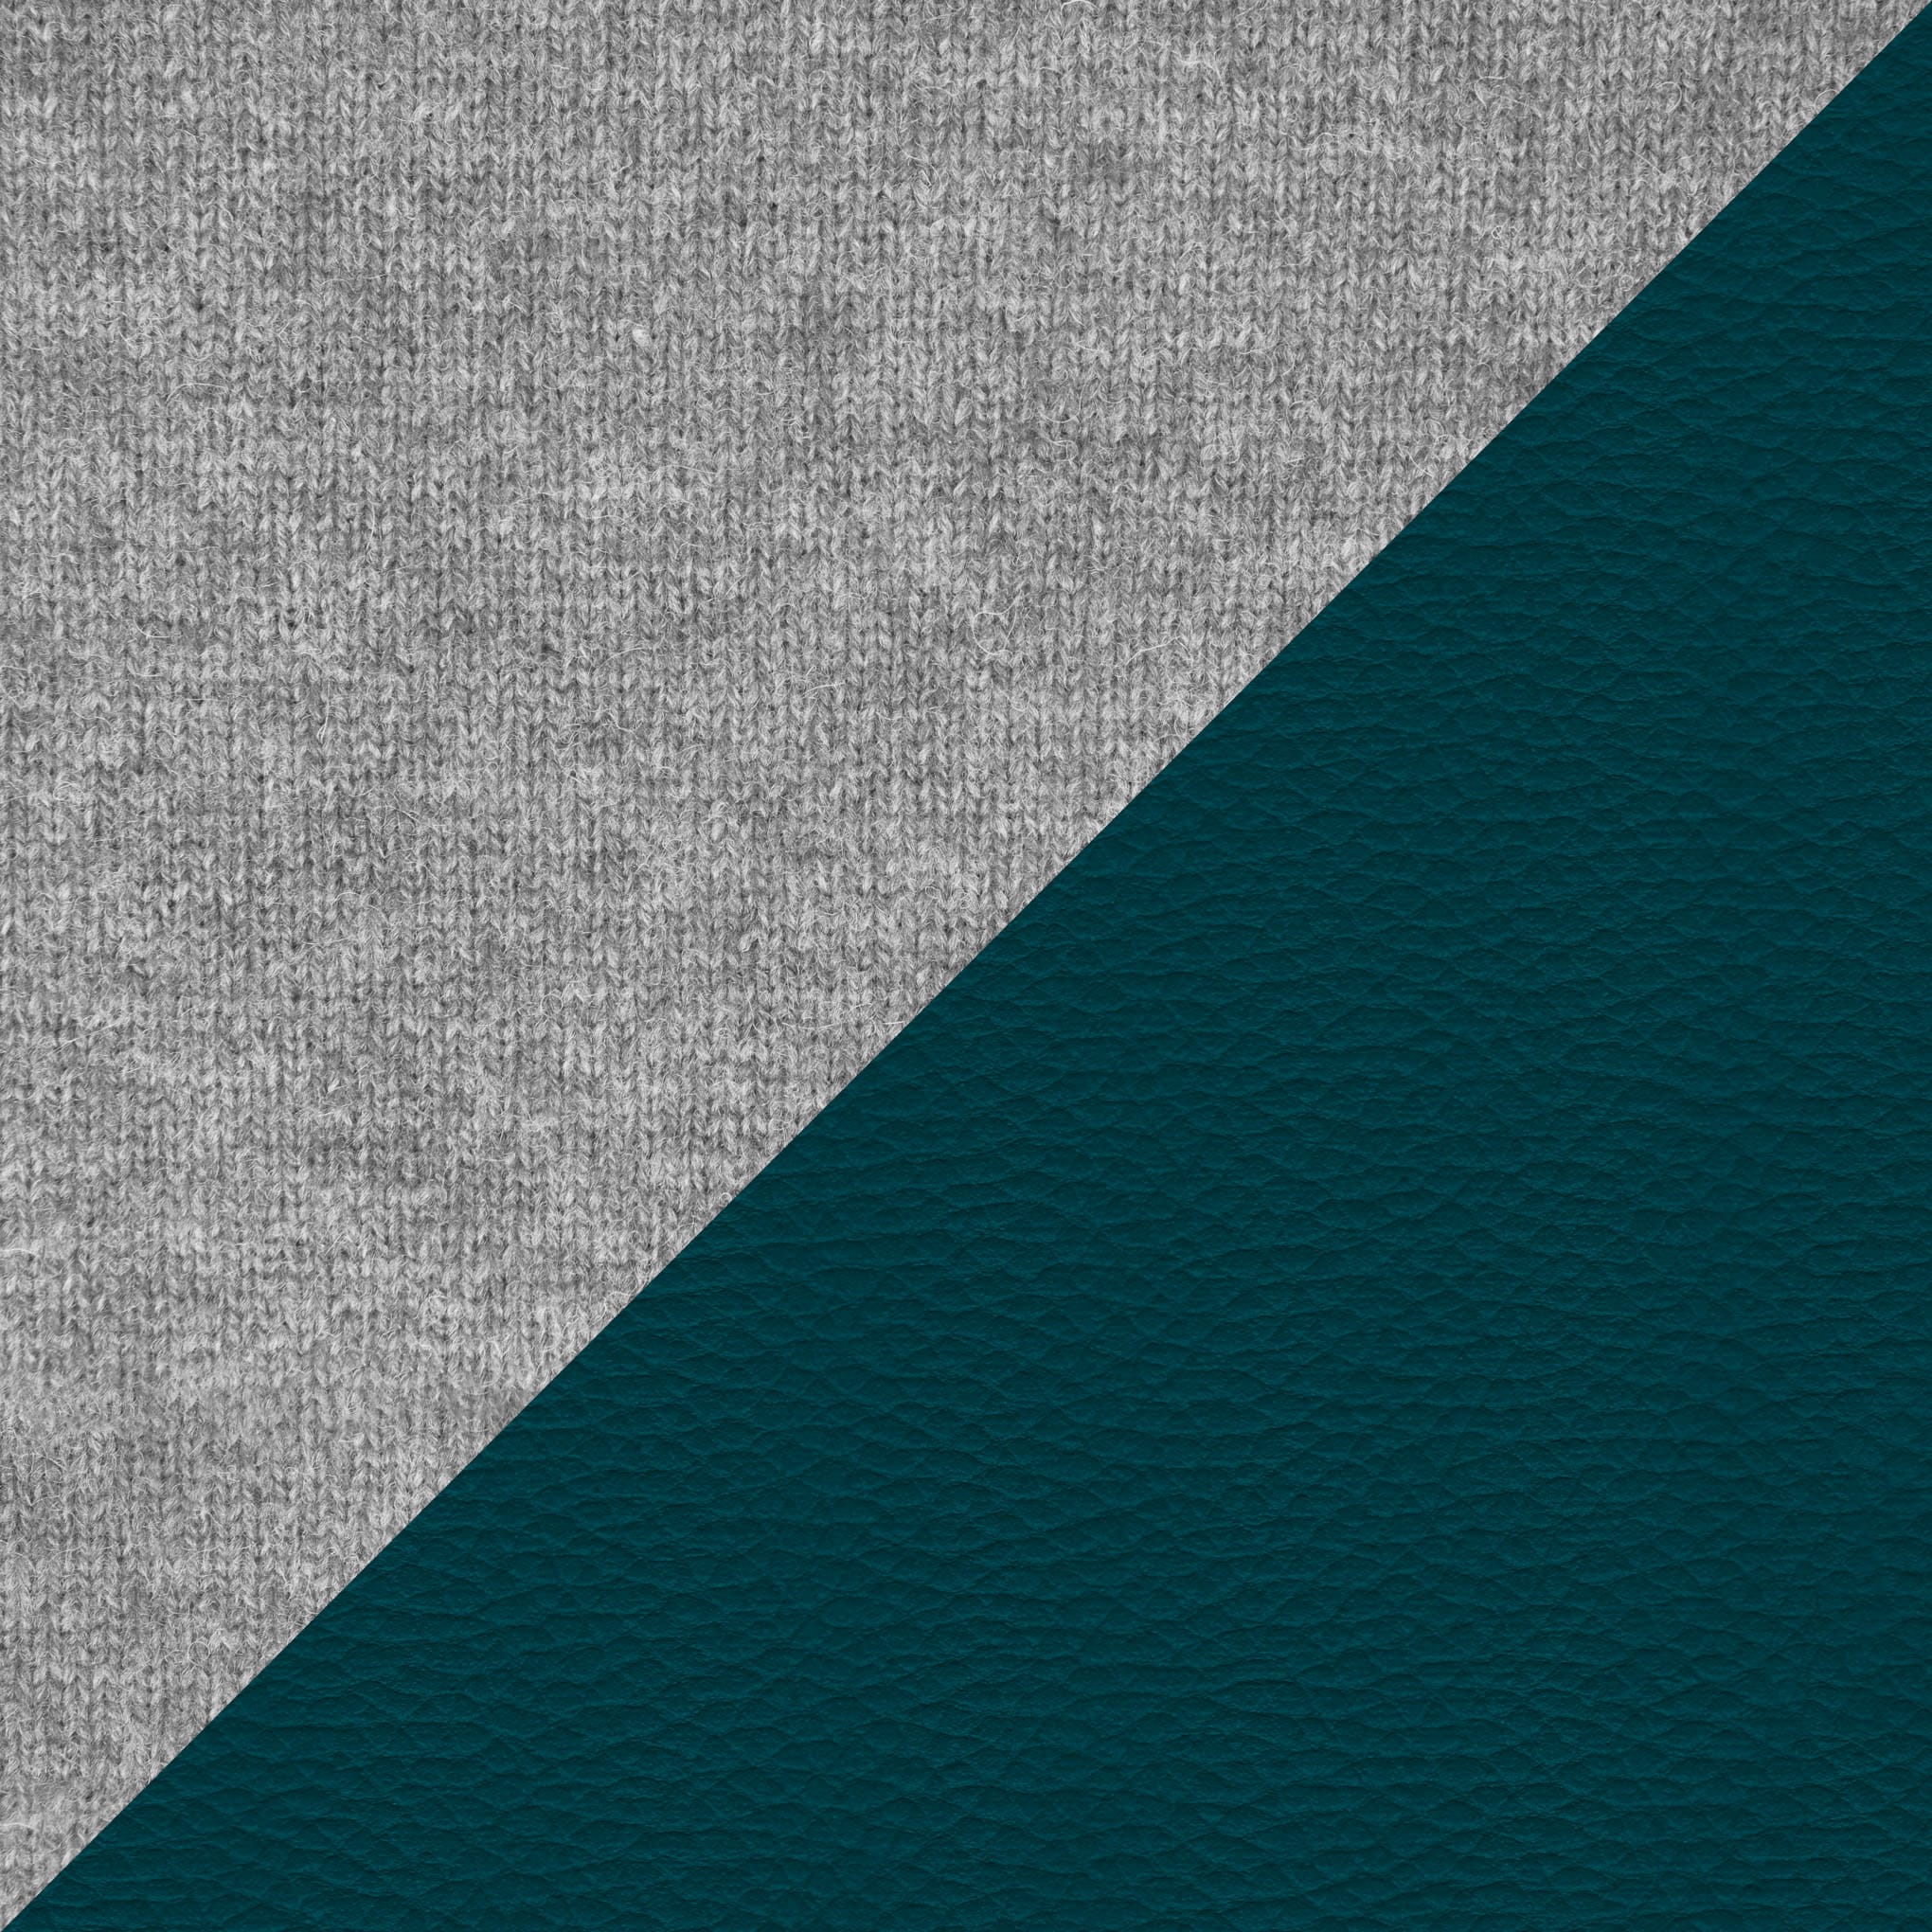 MO 150 Bay Sofa Altea Green Leather Shark Grey Fabric Closeup 4 1